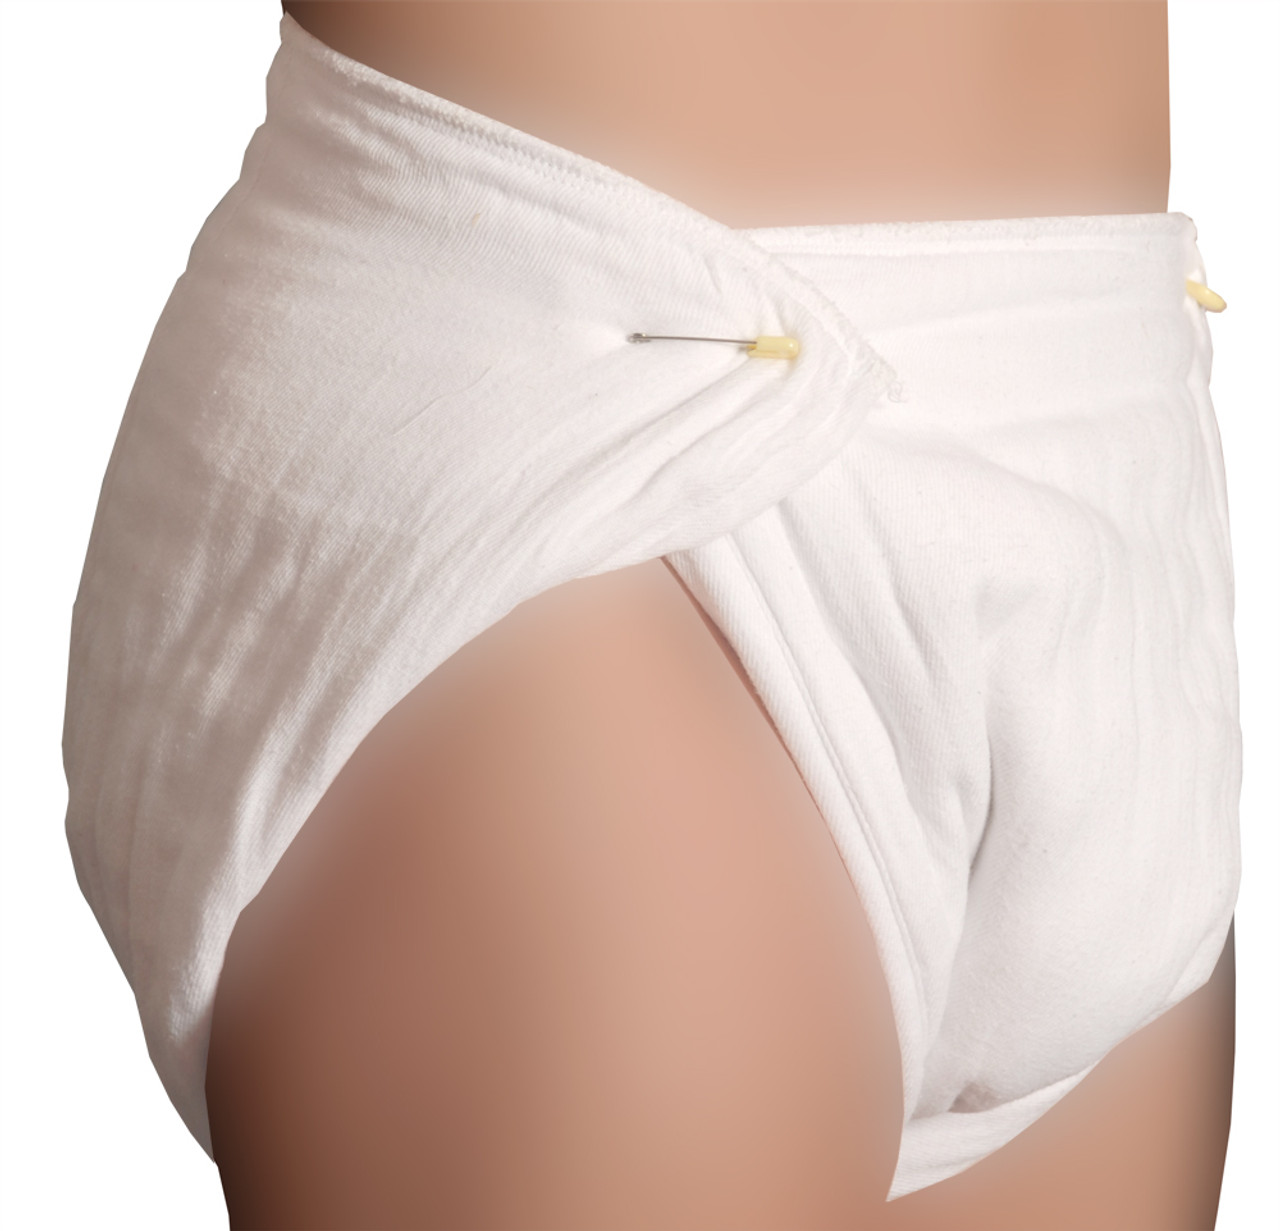 Adult Nighttime Cloth Diaper ⋆ ABDL Company